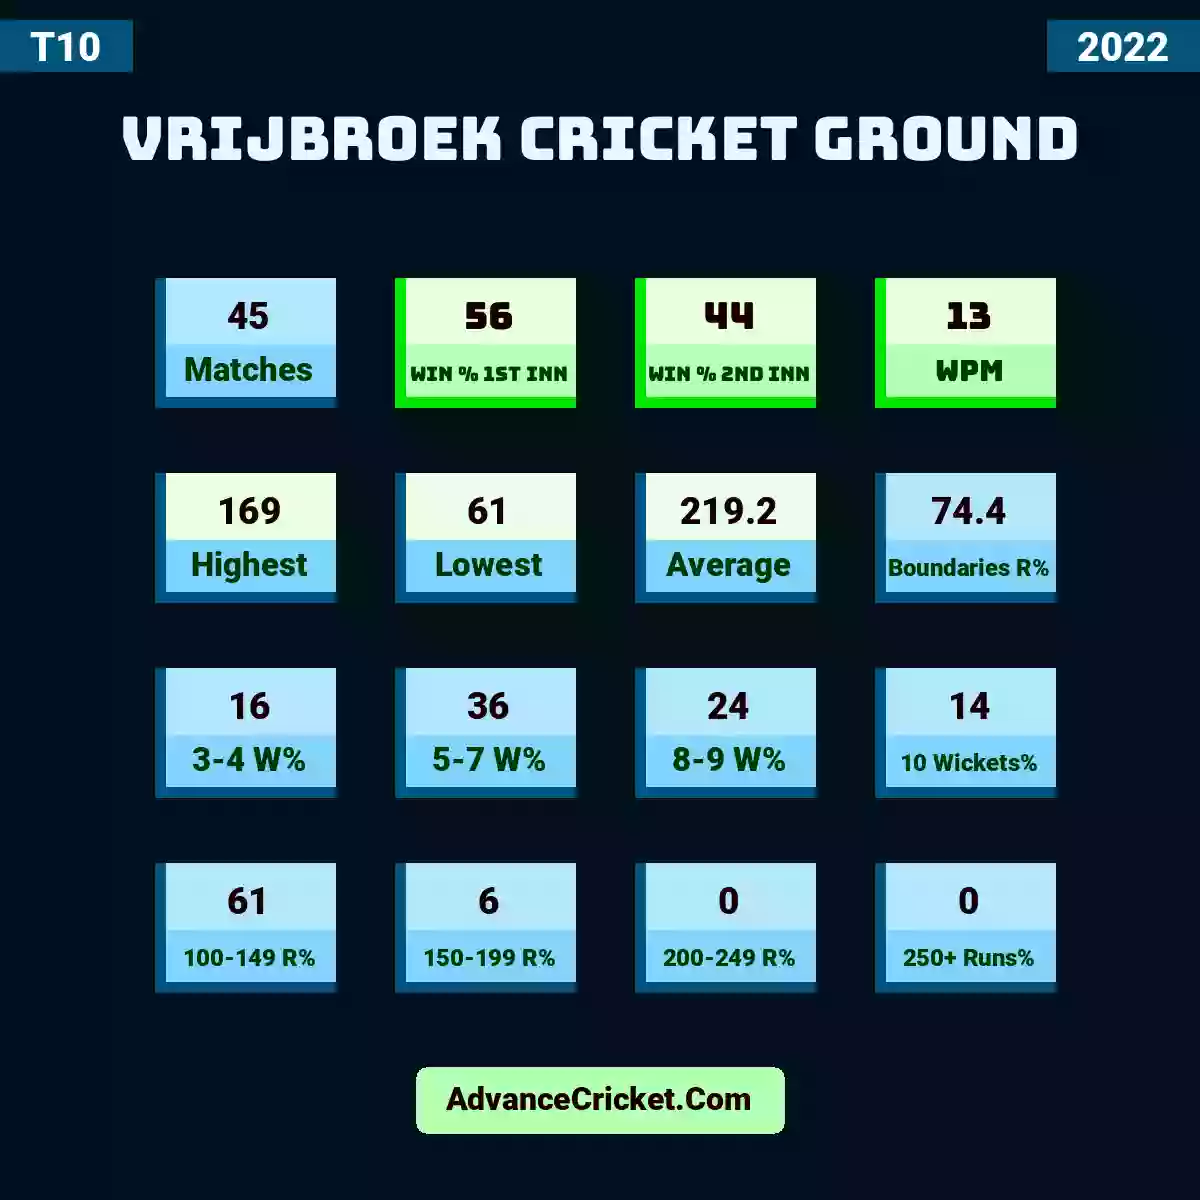 Image showing Vrijbroek Cricket Ground with Matches: 45, Win % 1st Inn: 56, Win % 2nd Inn: 44, WPM: 13, Highest: 169, Lowest: 61, Average: 219.2, Boundaries R%: 74.4, 3-4 W%: 16, 5-7 W%: 36, 8-9 W%: 24, 10 Wickets%: 14, 100-149 R%: 61, 150-199 R%: 6, 200-249 R%: 0, 250+ Runs%: 0.